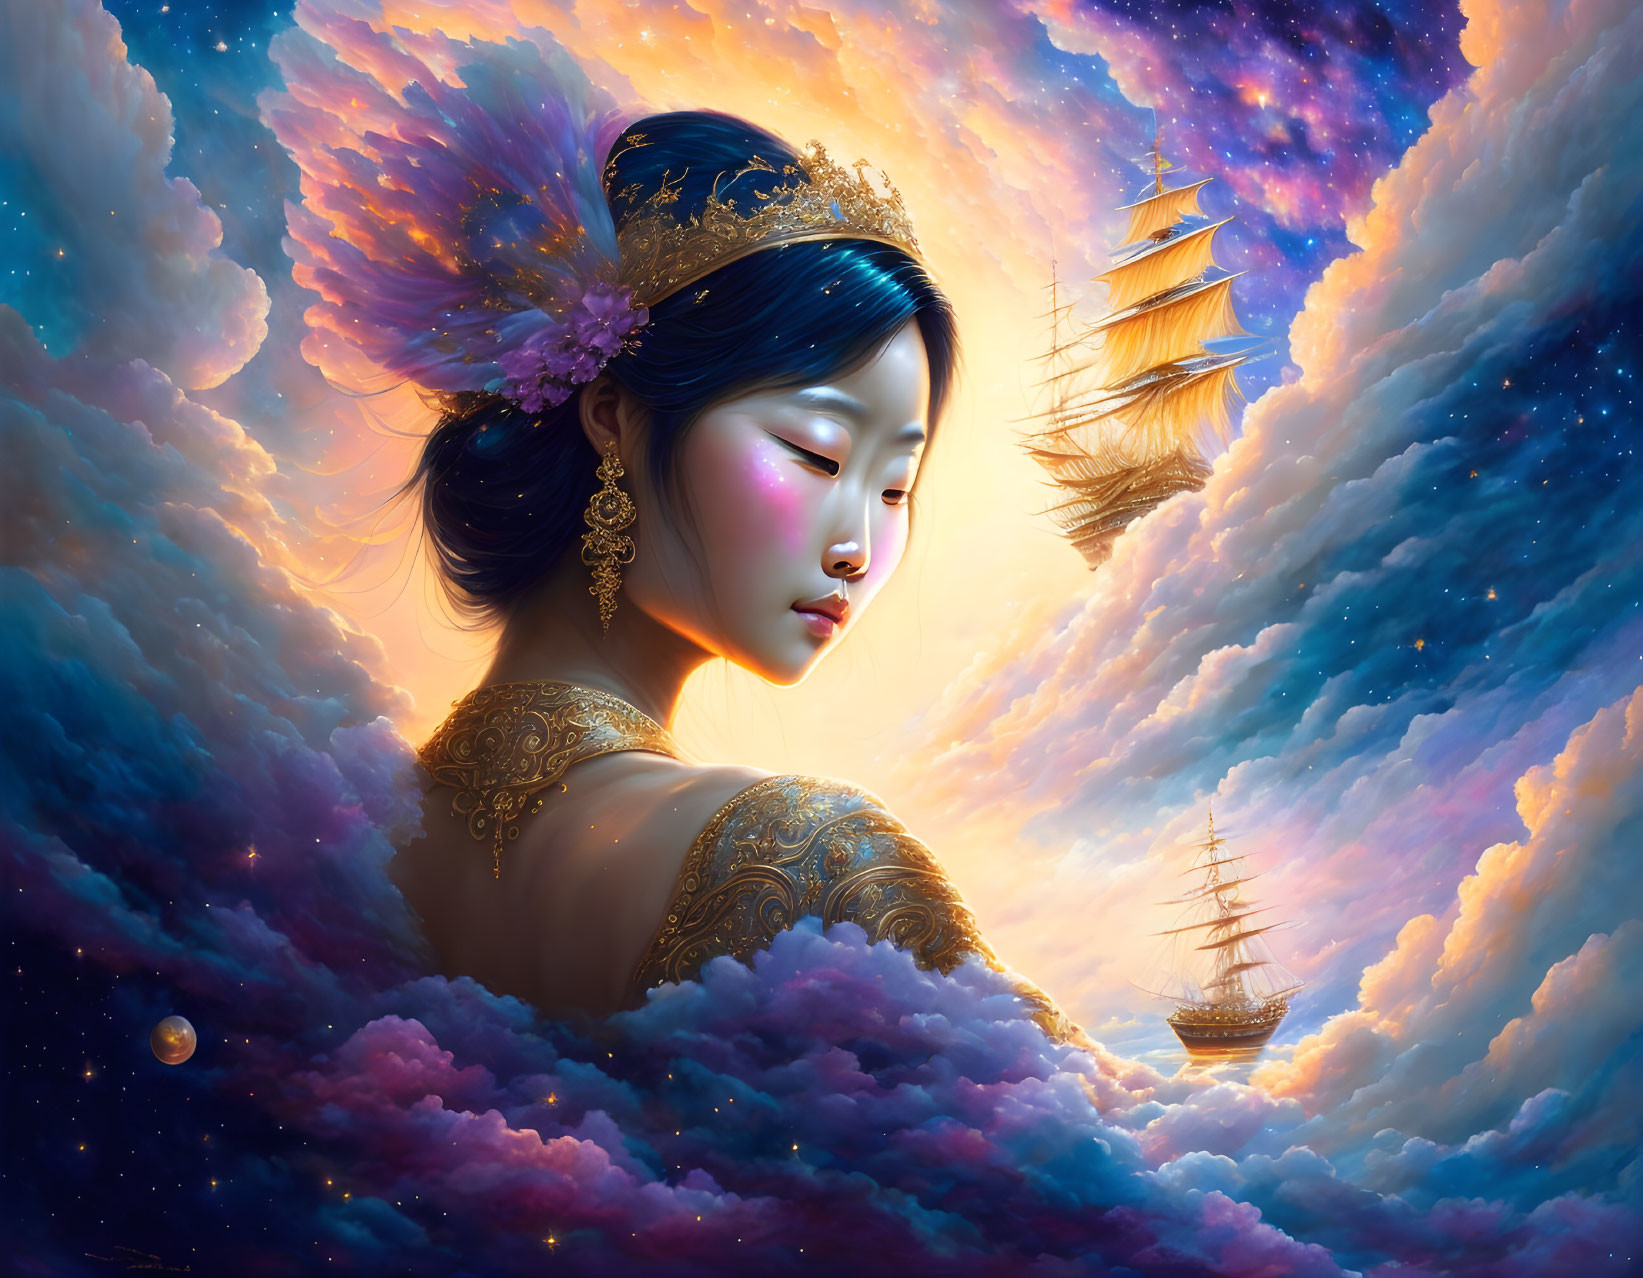 Digital artwork: Woman in ornate attire under starry sky